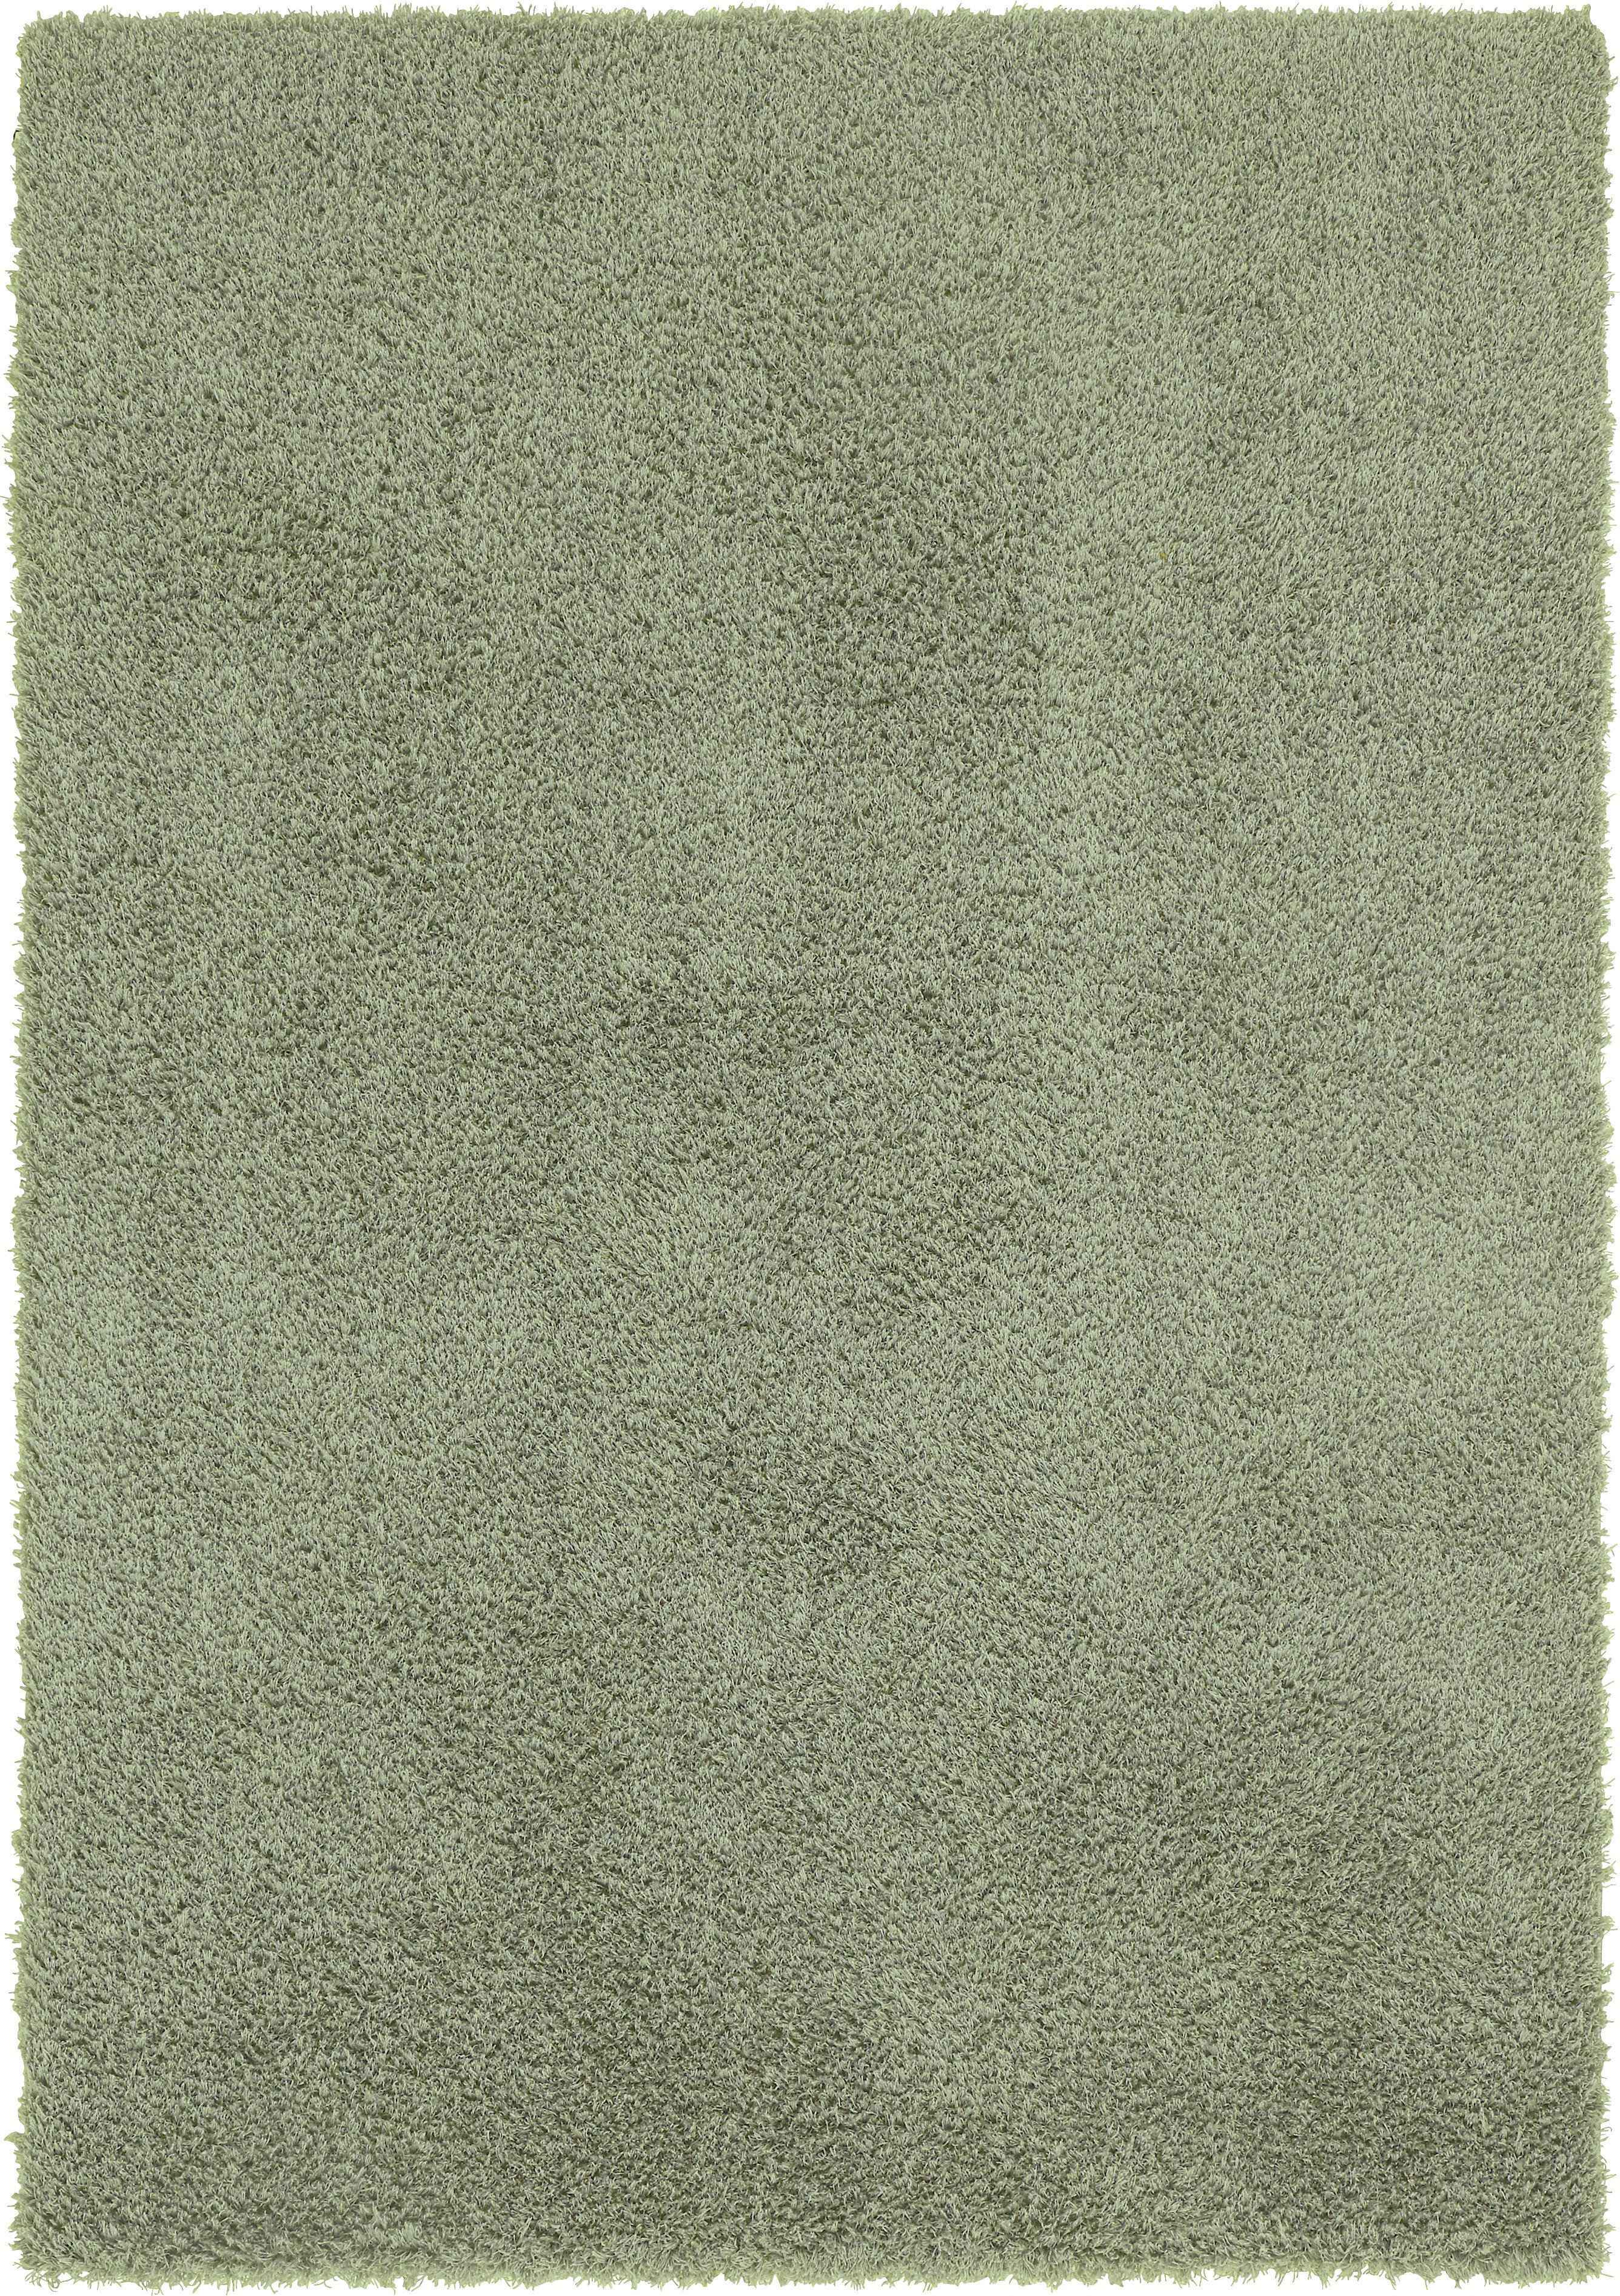 Koberec Shaggy Stefan 2, 120/170cm, Zelená - zelená, Moderný, textil (120/170cm) - Modern Living